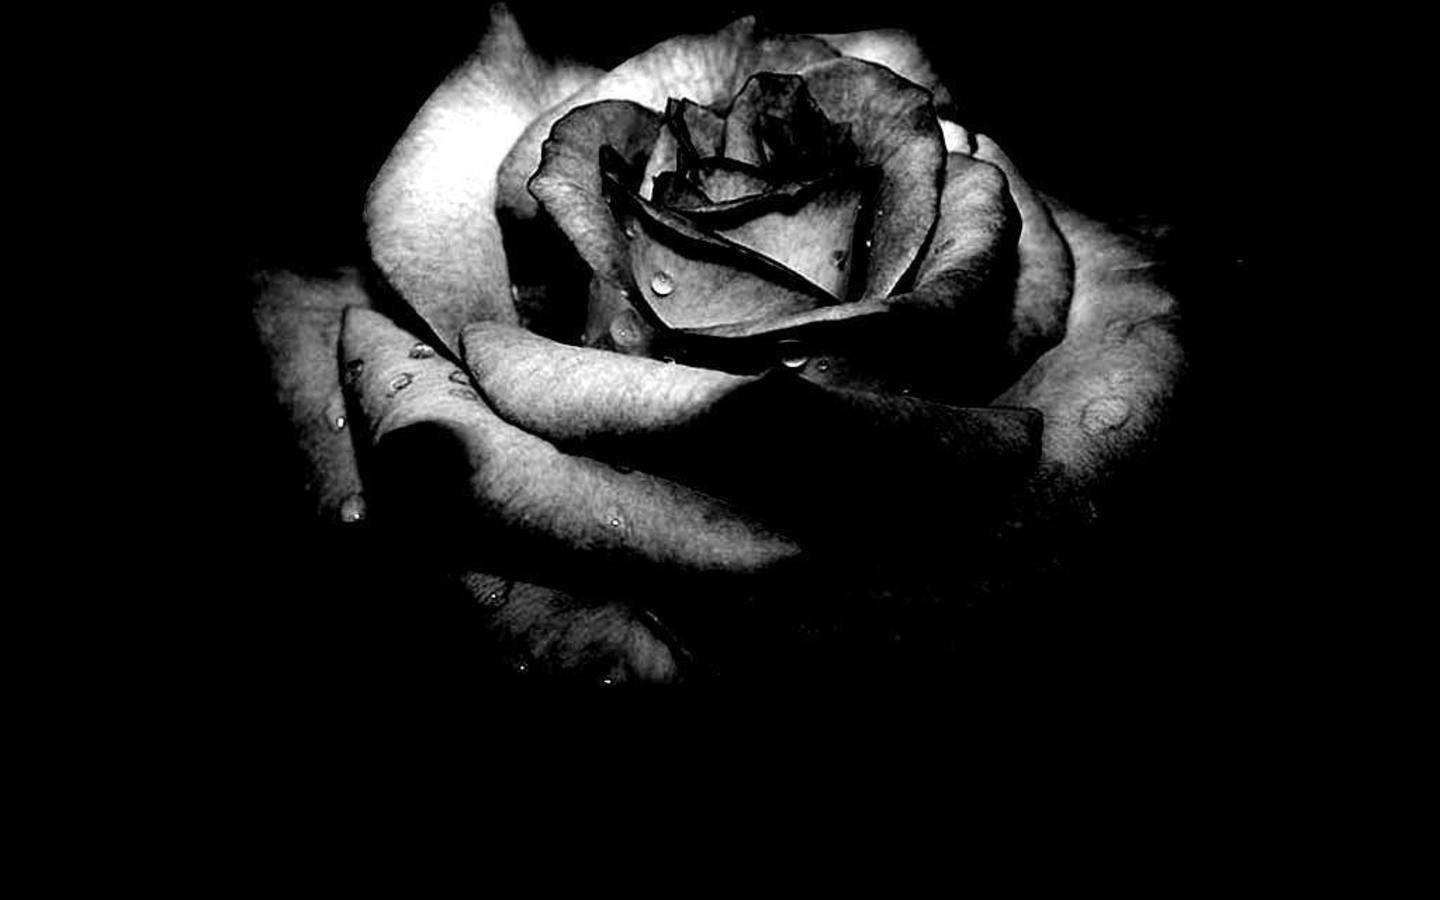 Rose black picture single free Black rose